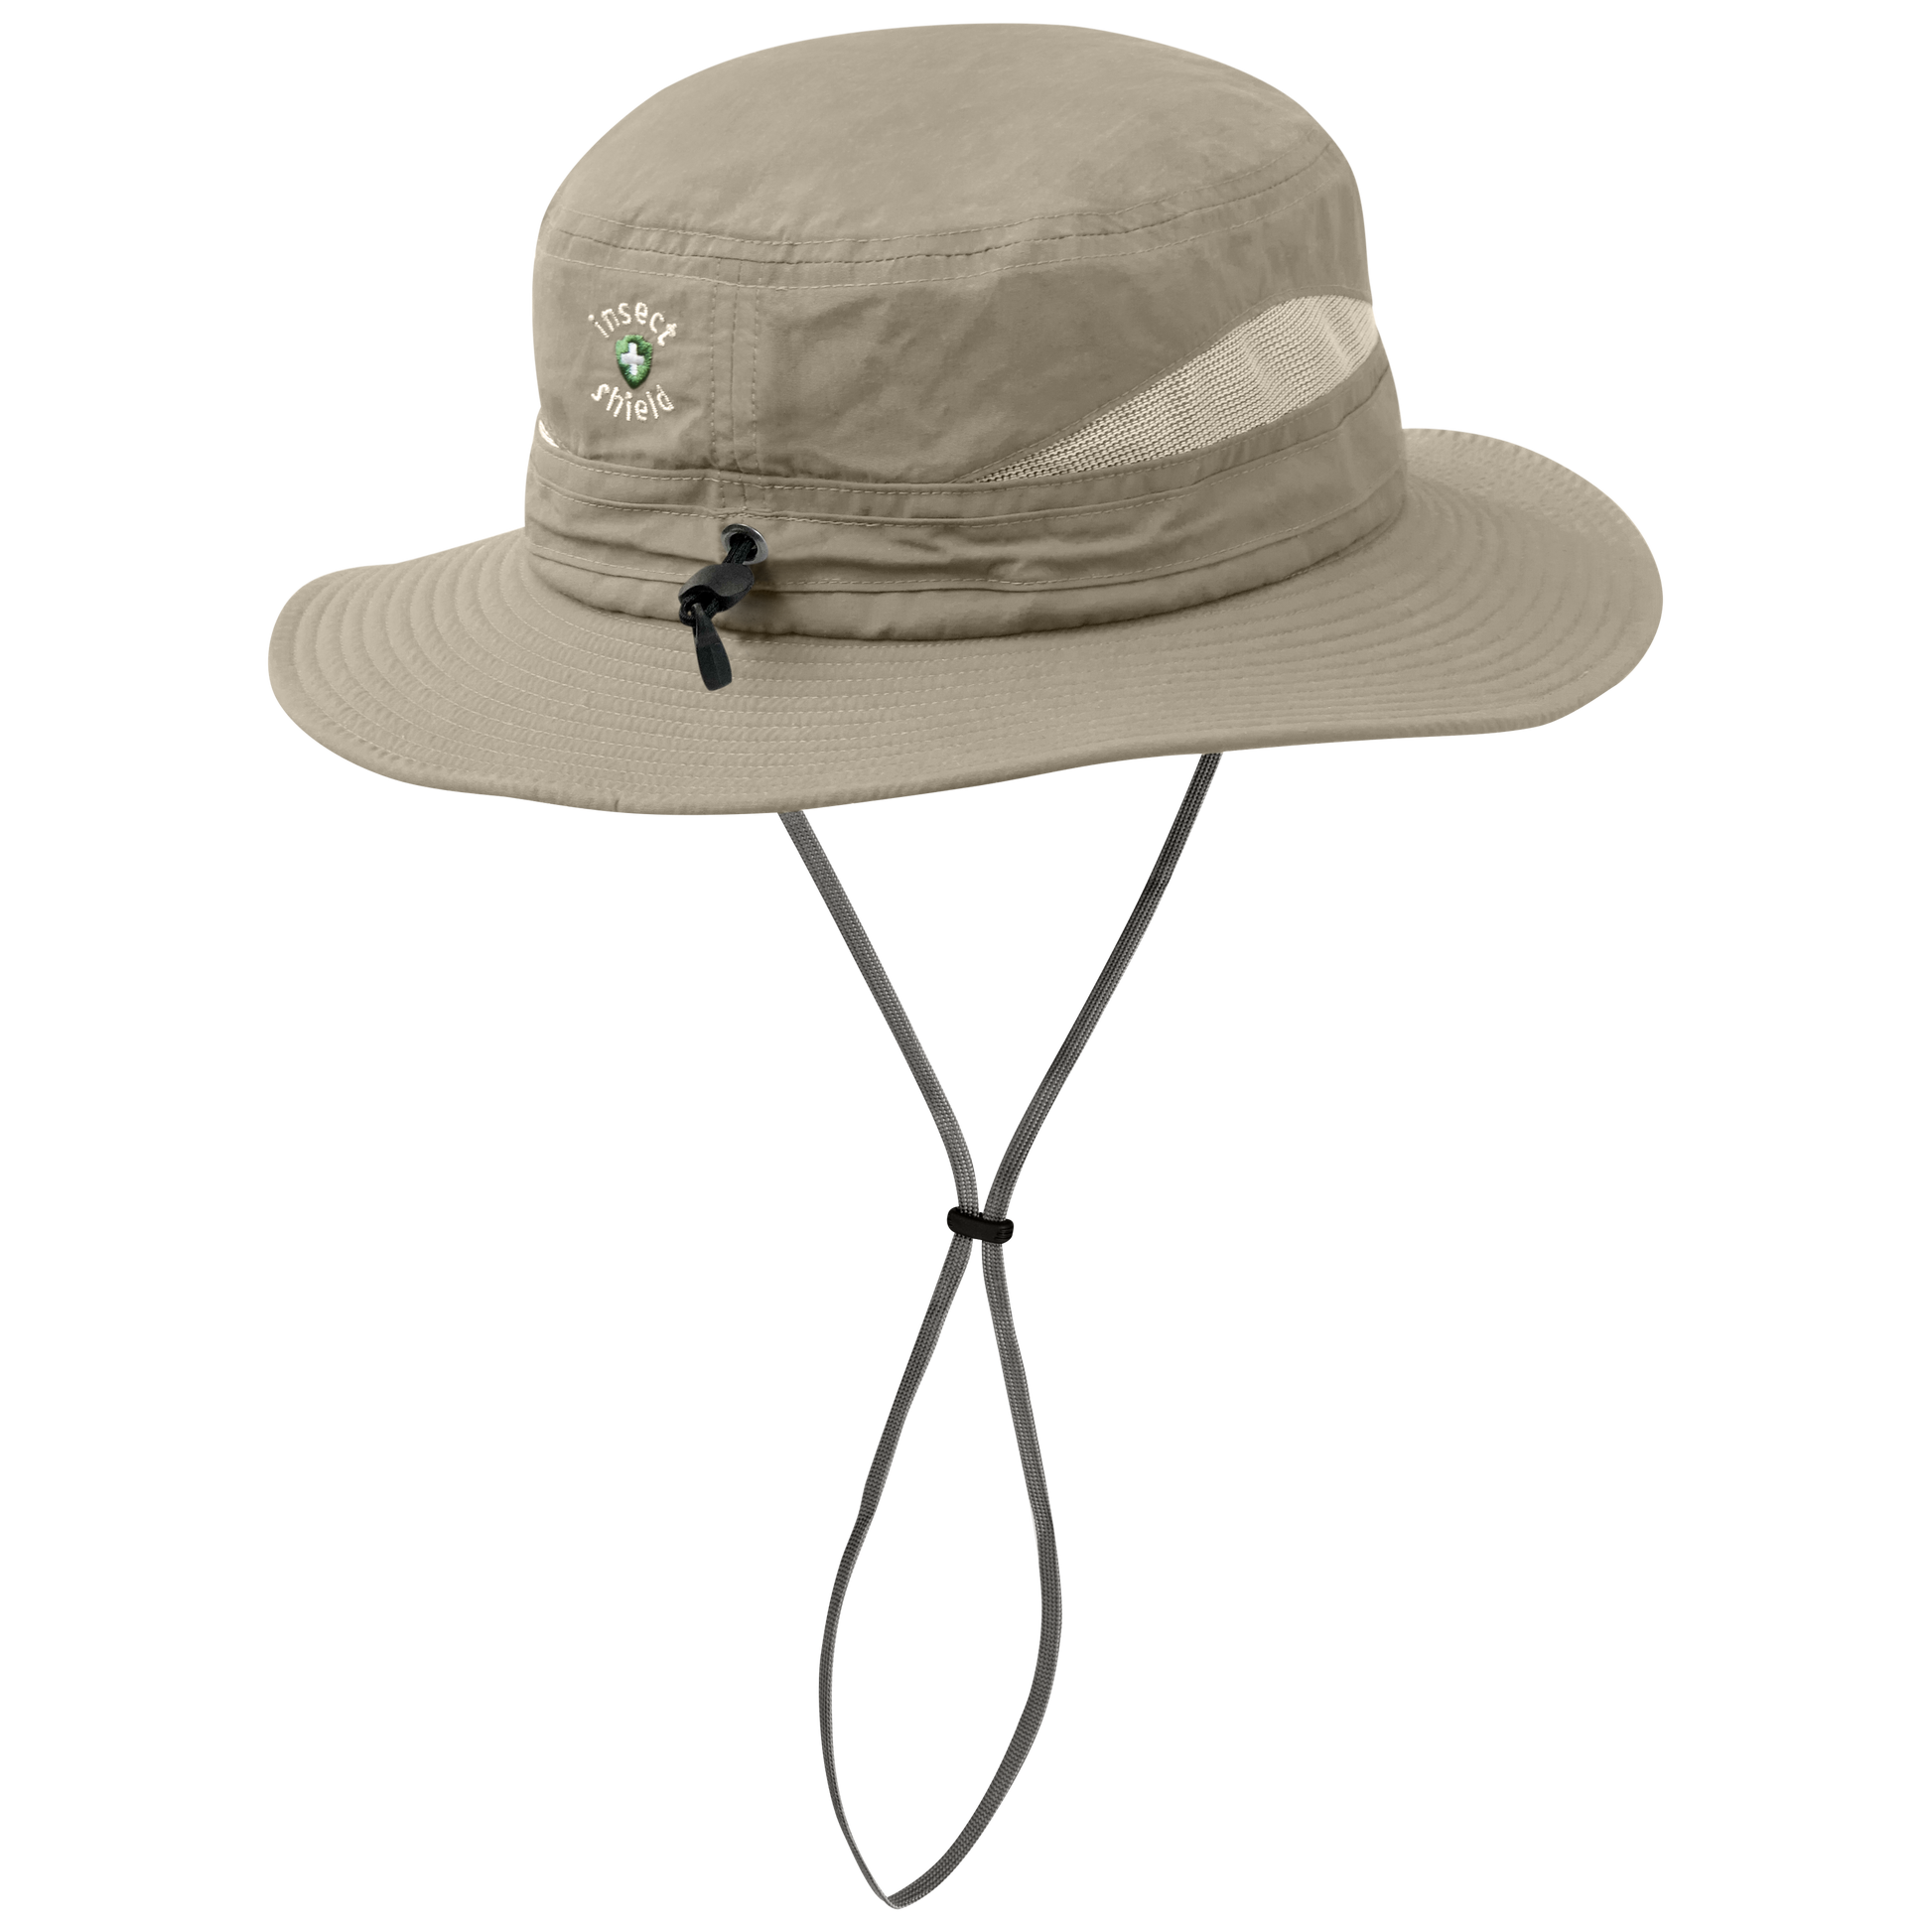 Outdoor Research Bugout Brim Hat - Khaki